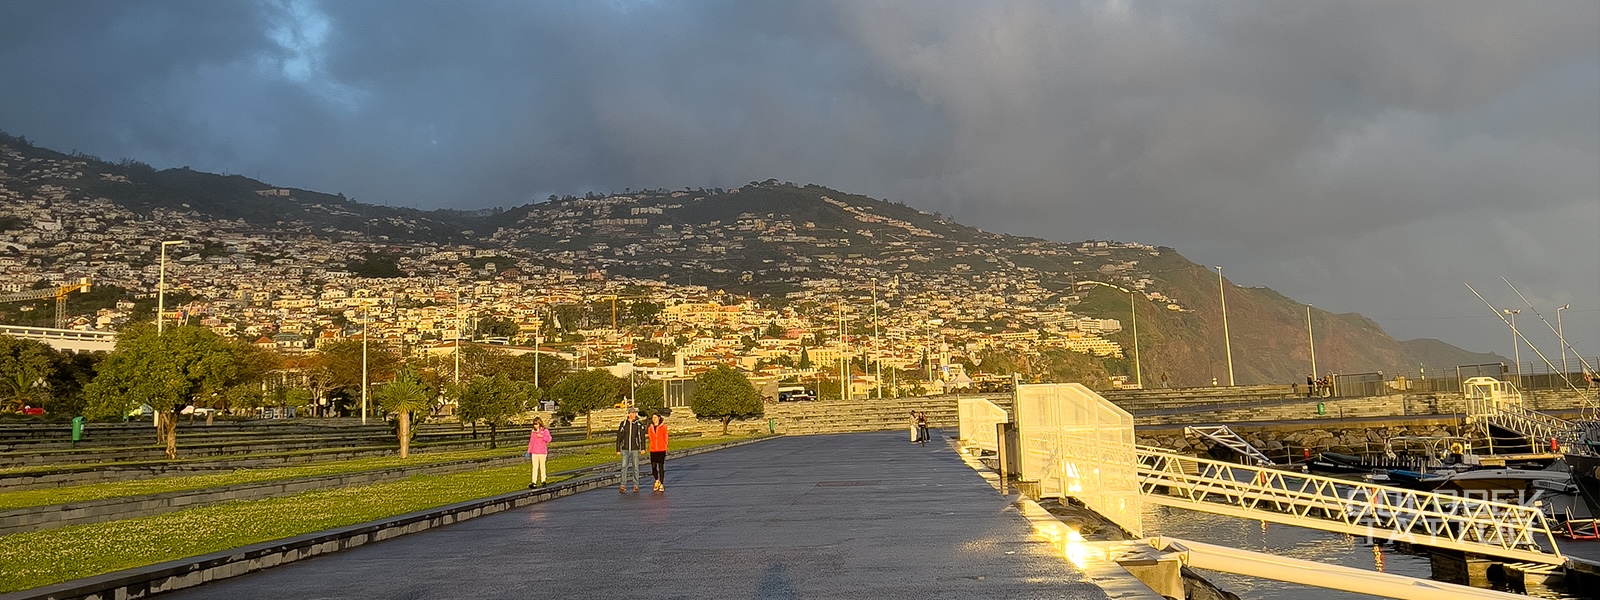 Funchal city, Madeira island